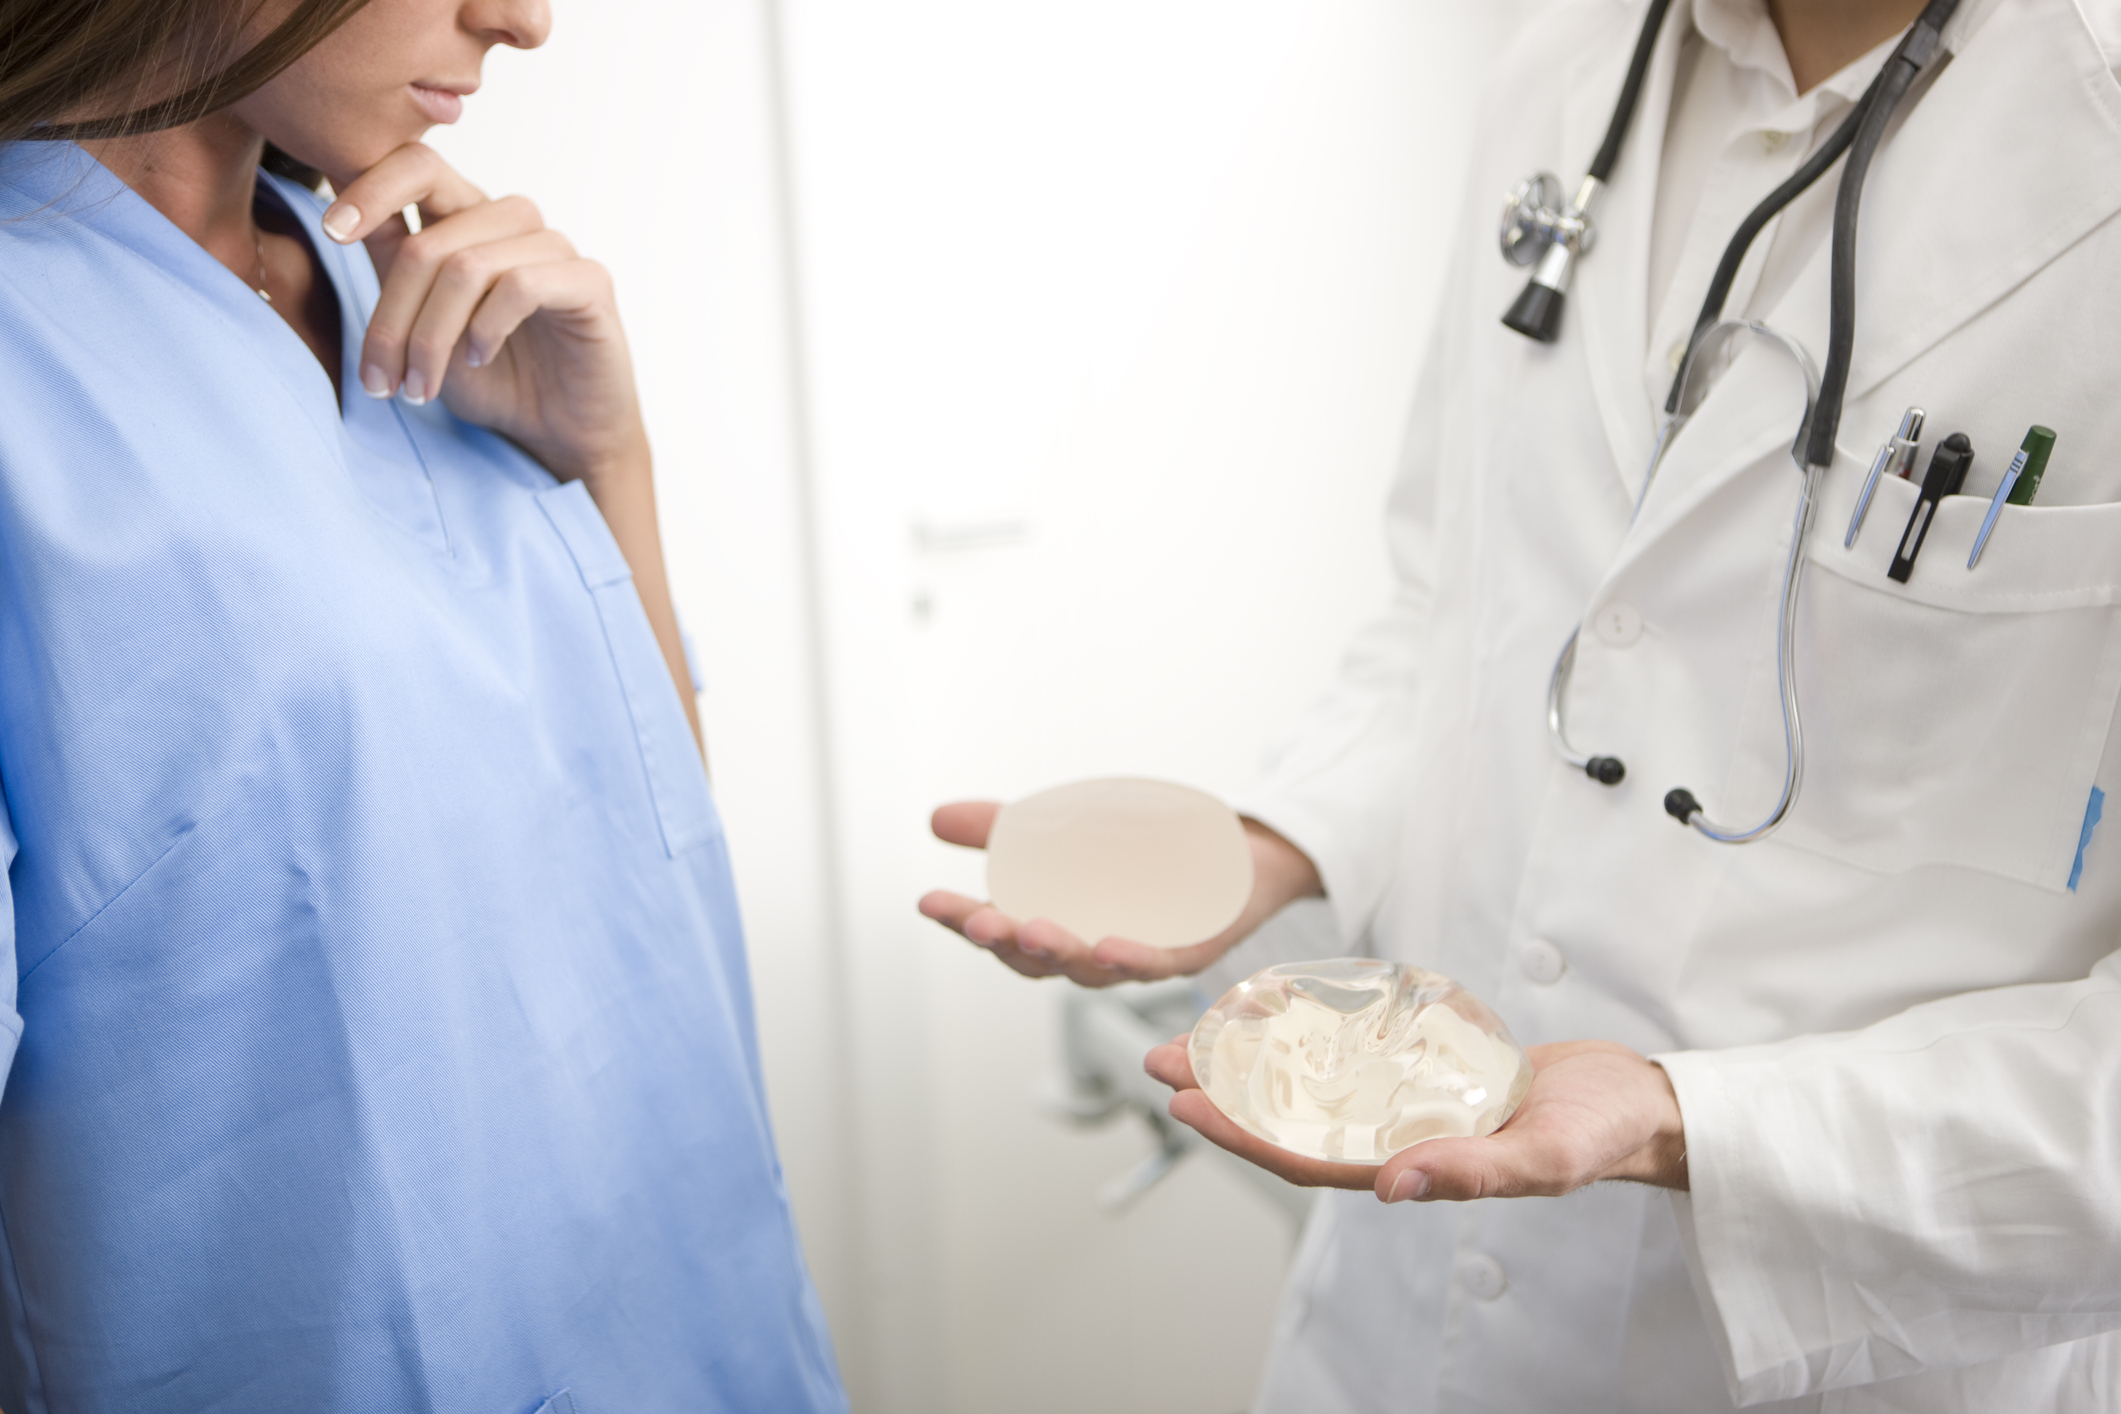 Breast Implant Illness Treatments in Bucks County, PA